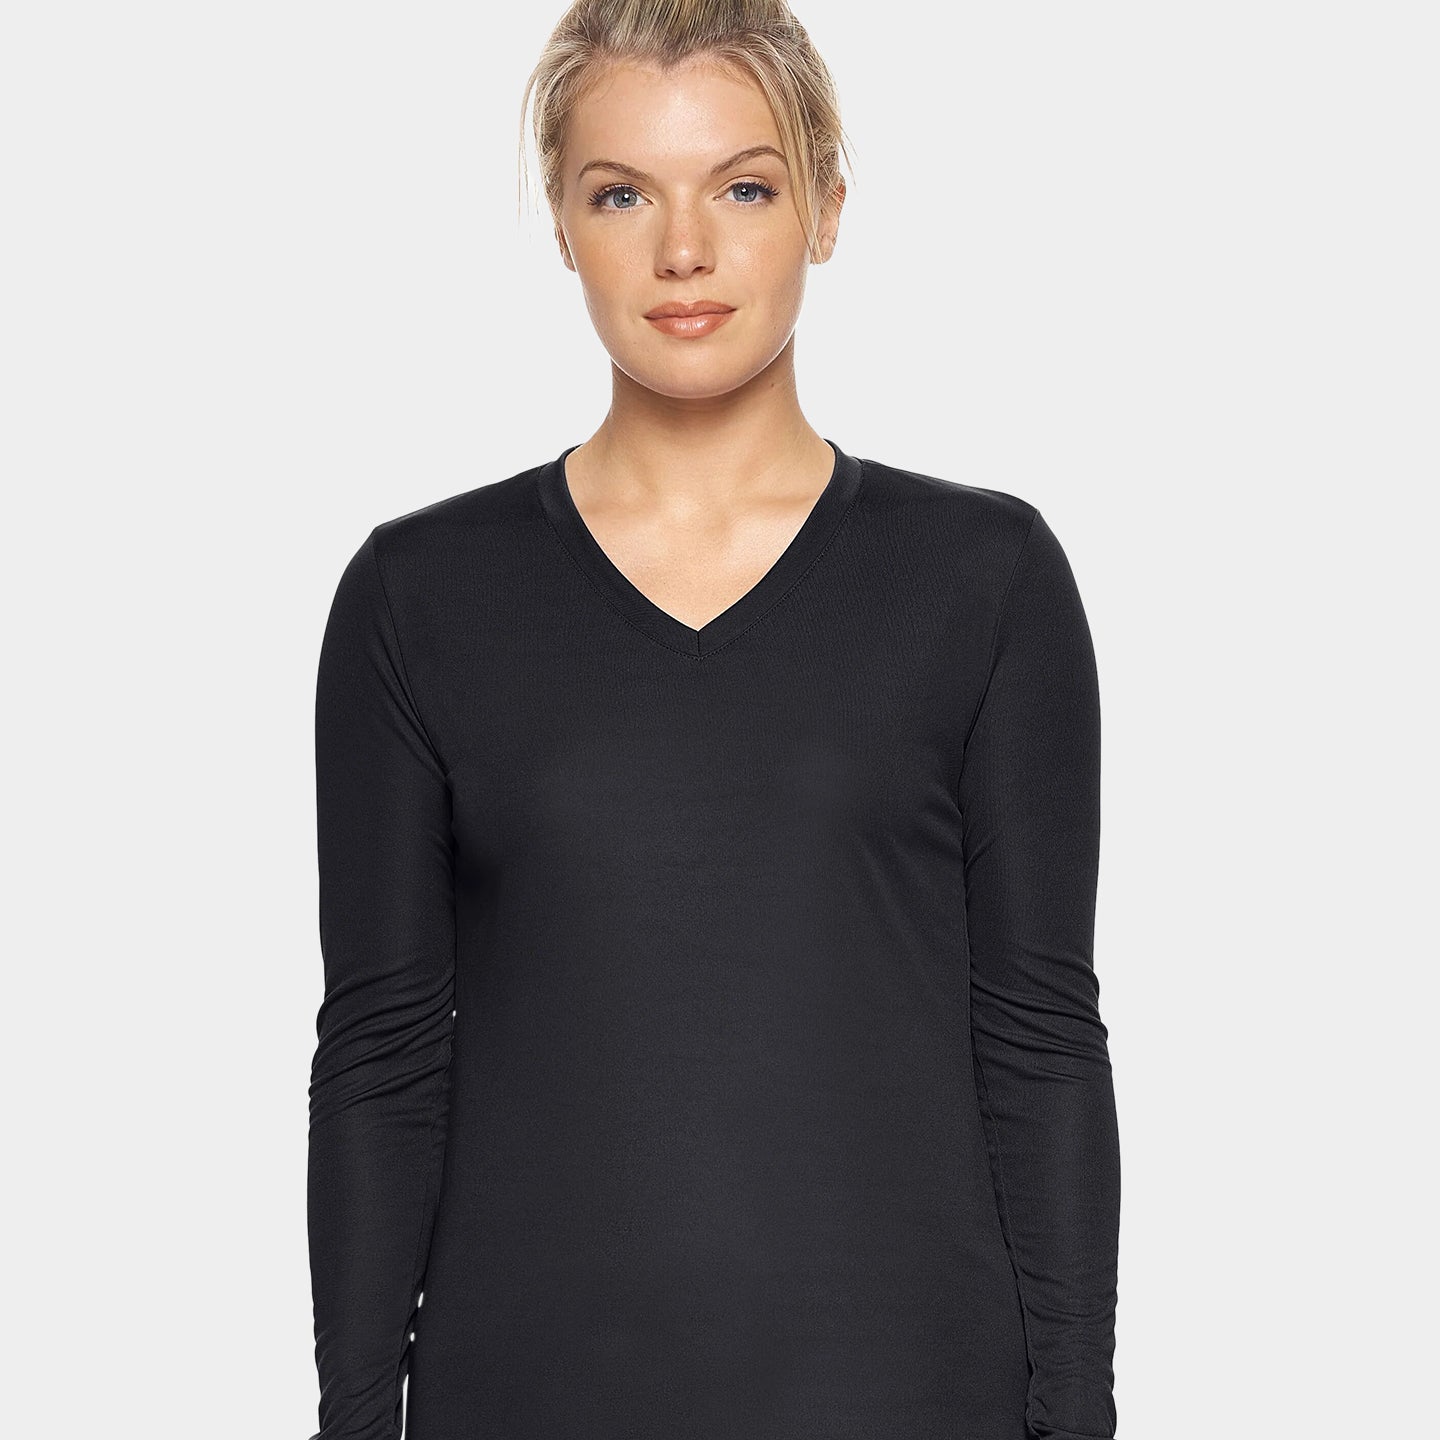 Expert Brand DriMax Women's Performance V-Neck Long Sleeve Shirt, M, Black A1